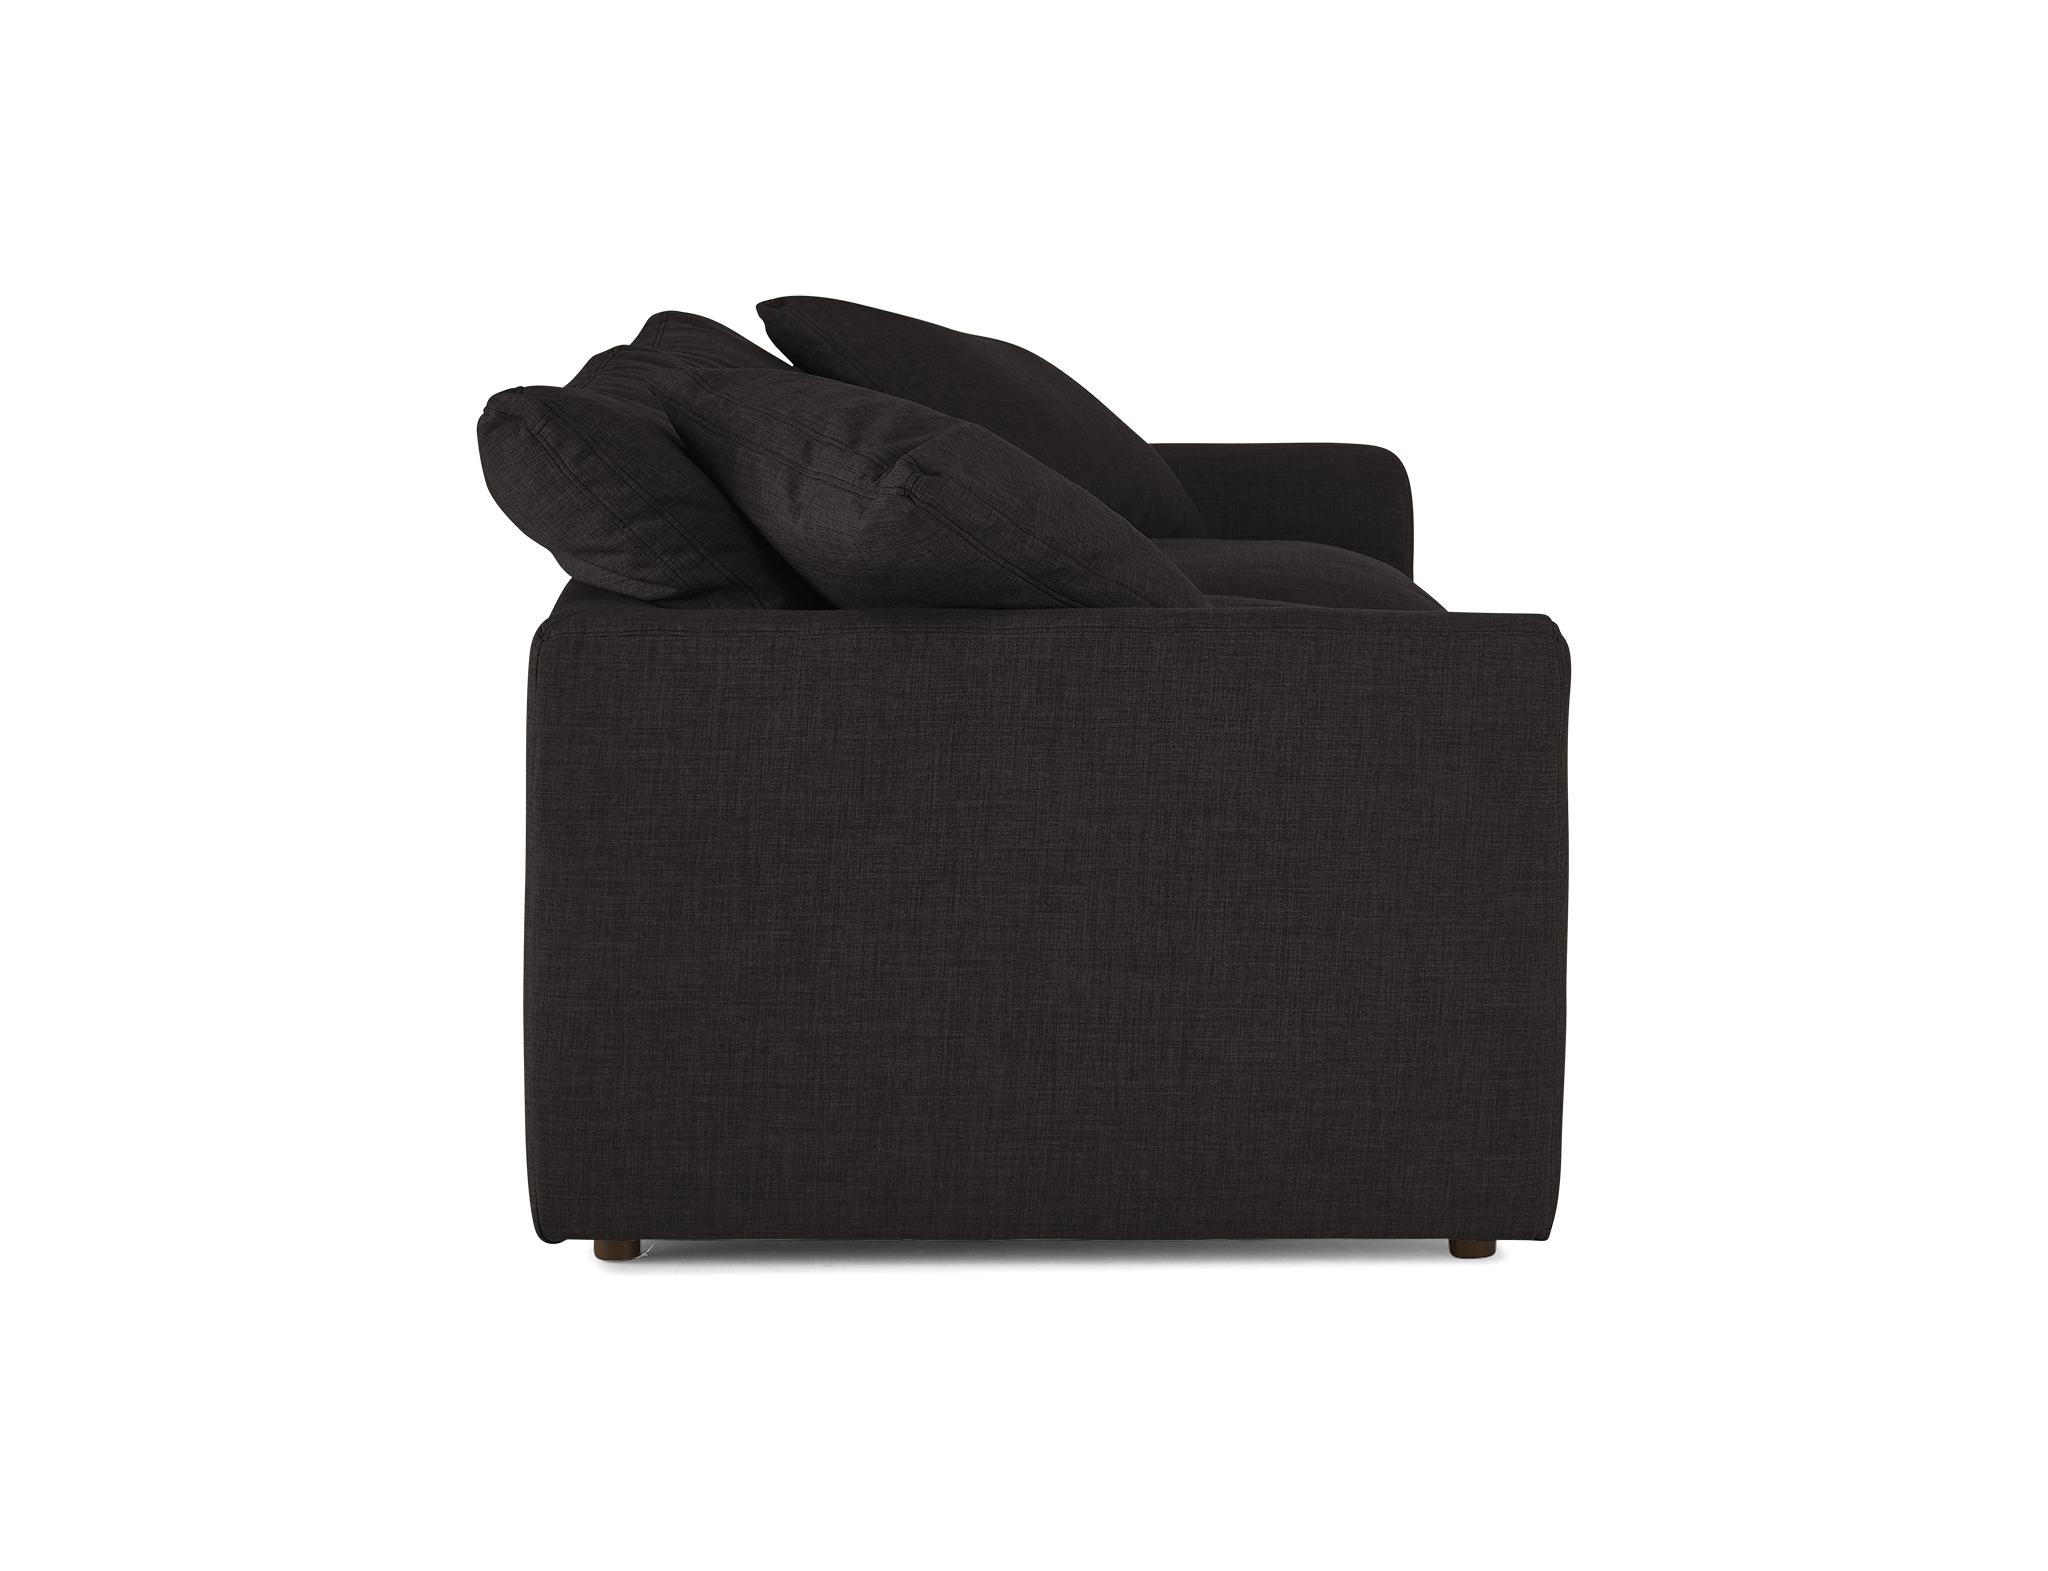 Gray Bryant Mid Century Modern Sofa - Cordova Eclipse - Image 2